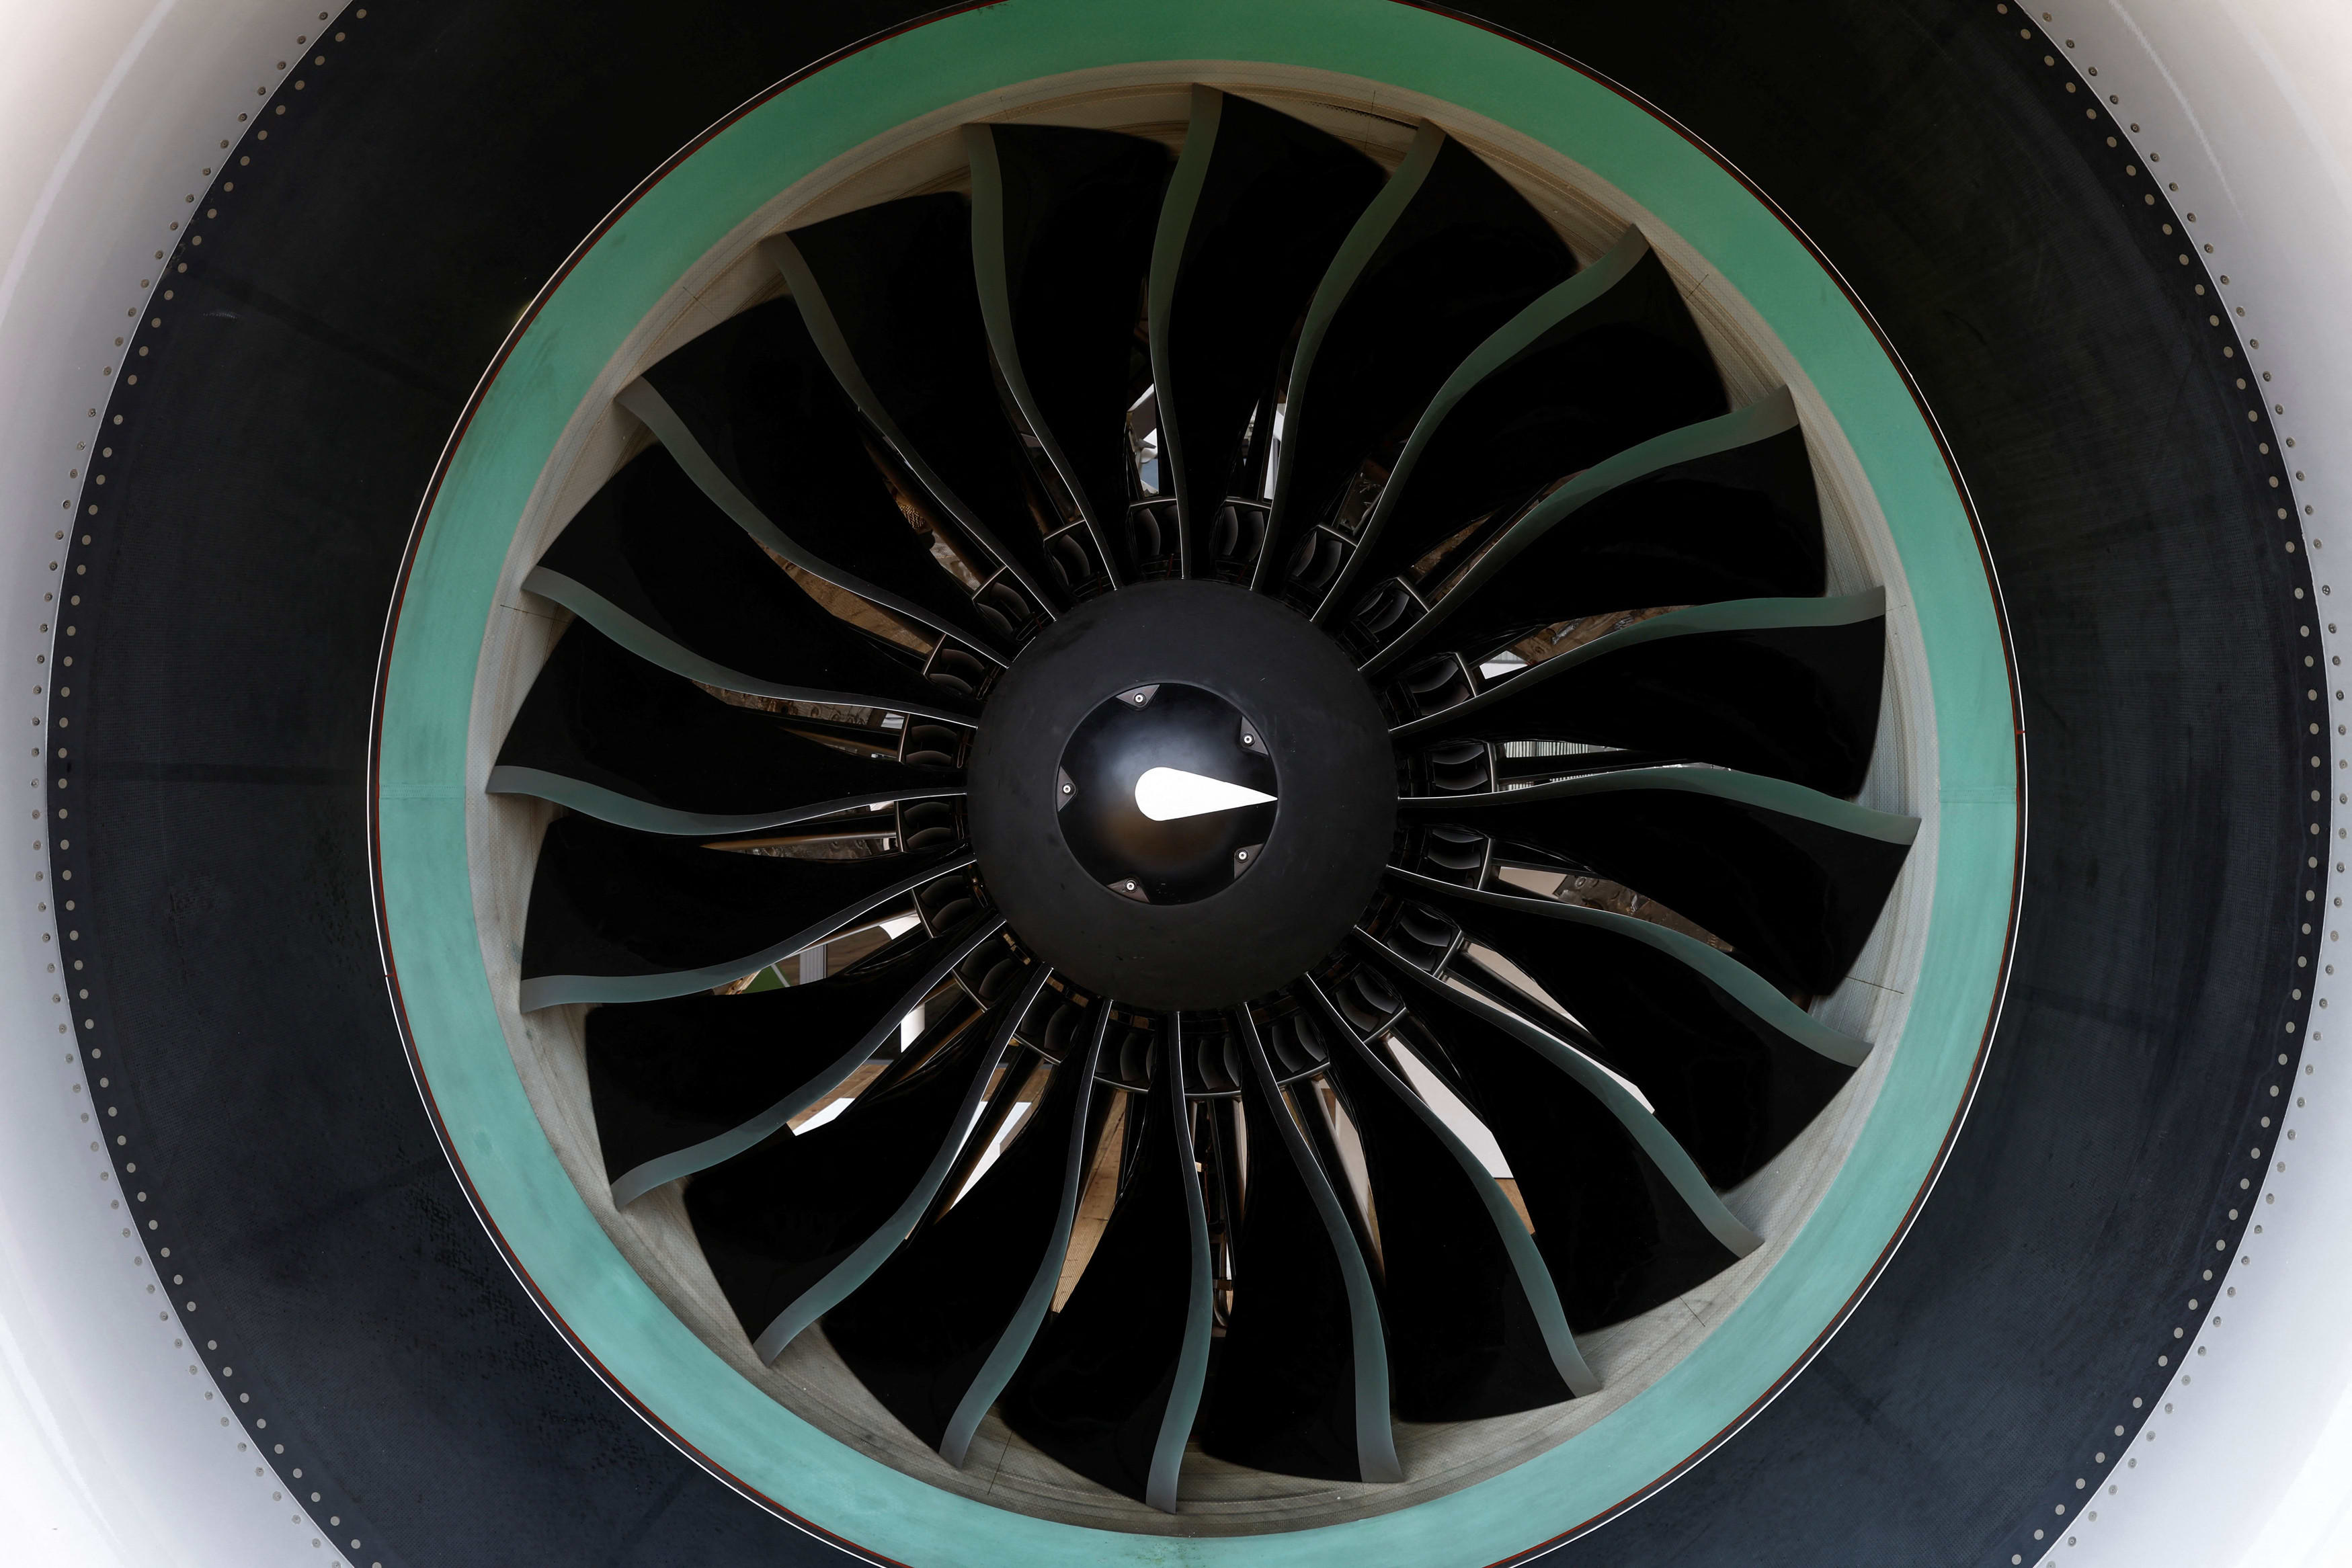 RTX akan mengenakan biaya $3 miliar atas masalah mesin Pratt & Whitney